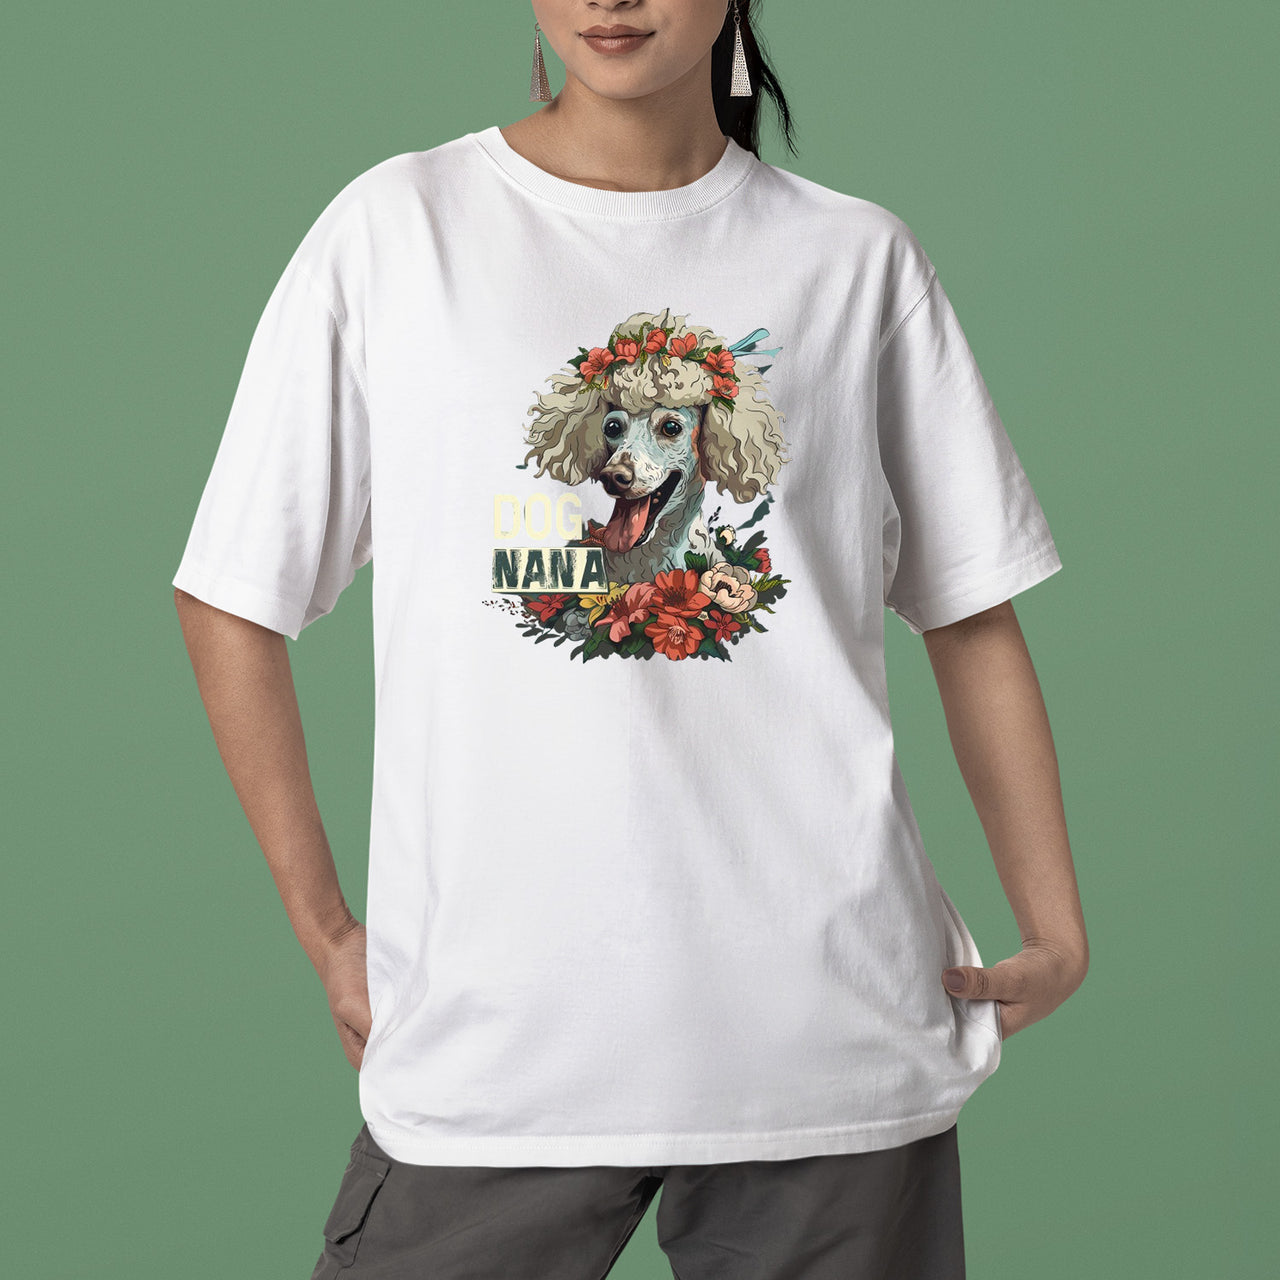 Poodle Dog T-shirt, Pet Lover Shirt, Dog Lover Shirt, Dog Nana  T-Shirt, Dog Owner Shirt, Gift For Dog Grandma, Funny Dog Shirts, Women Dog T-Shirt, Mother's Day Gift, Dog Lover Wife Gifts, Dog Shirt